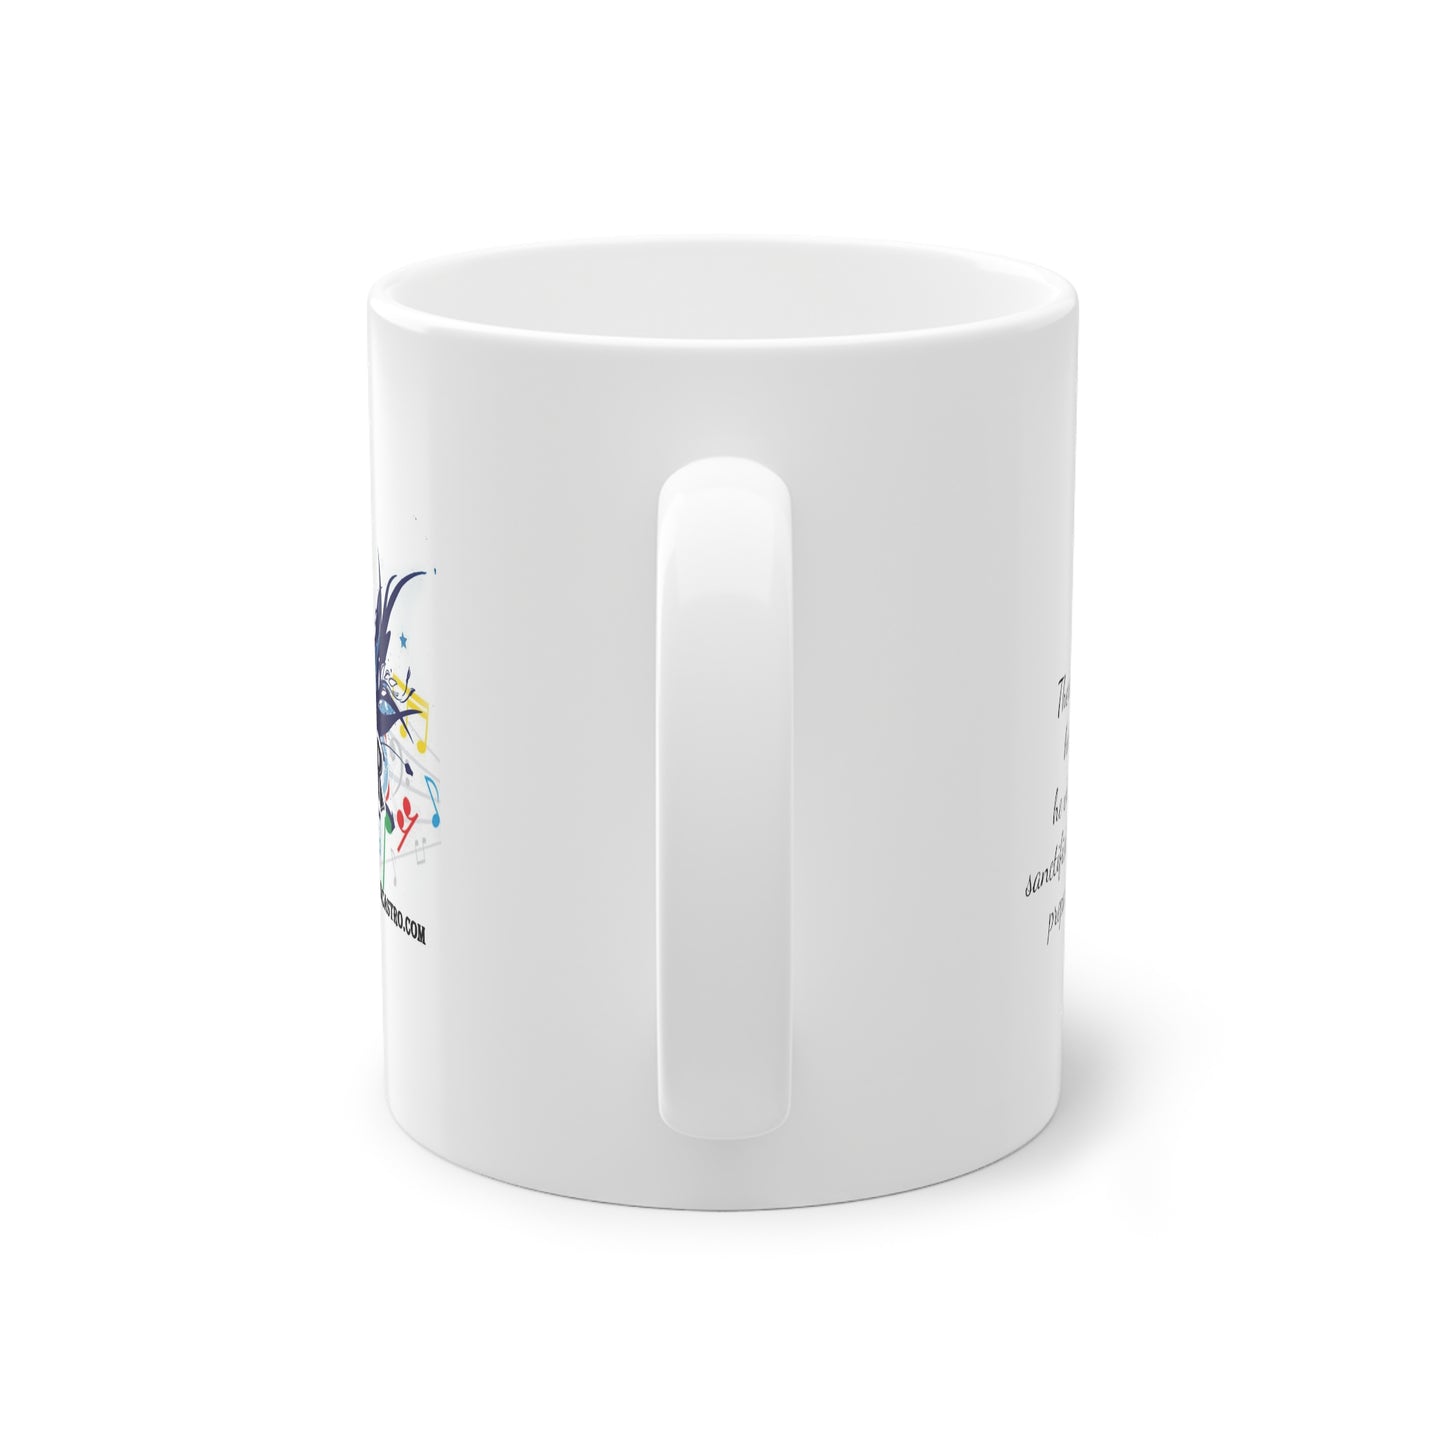 Vessel of Honor - coffee Mug 11 oz